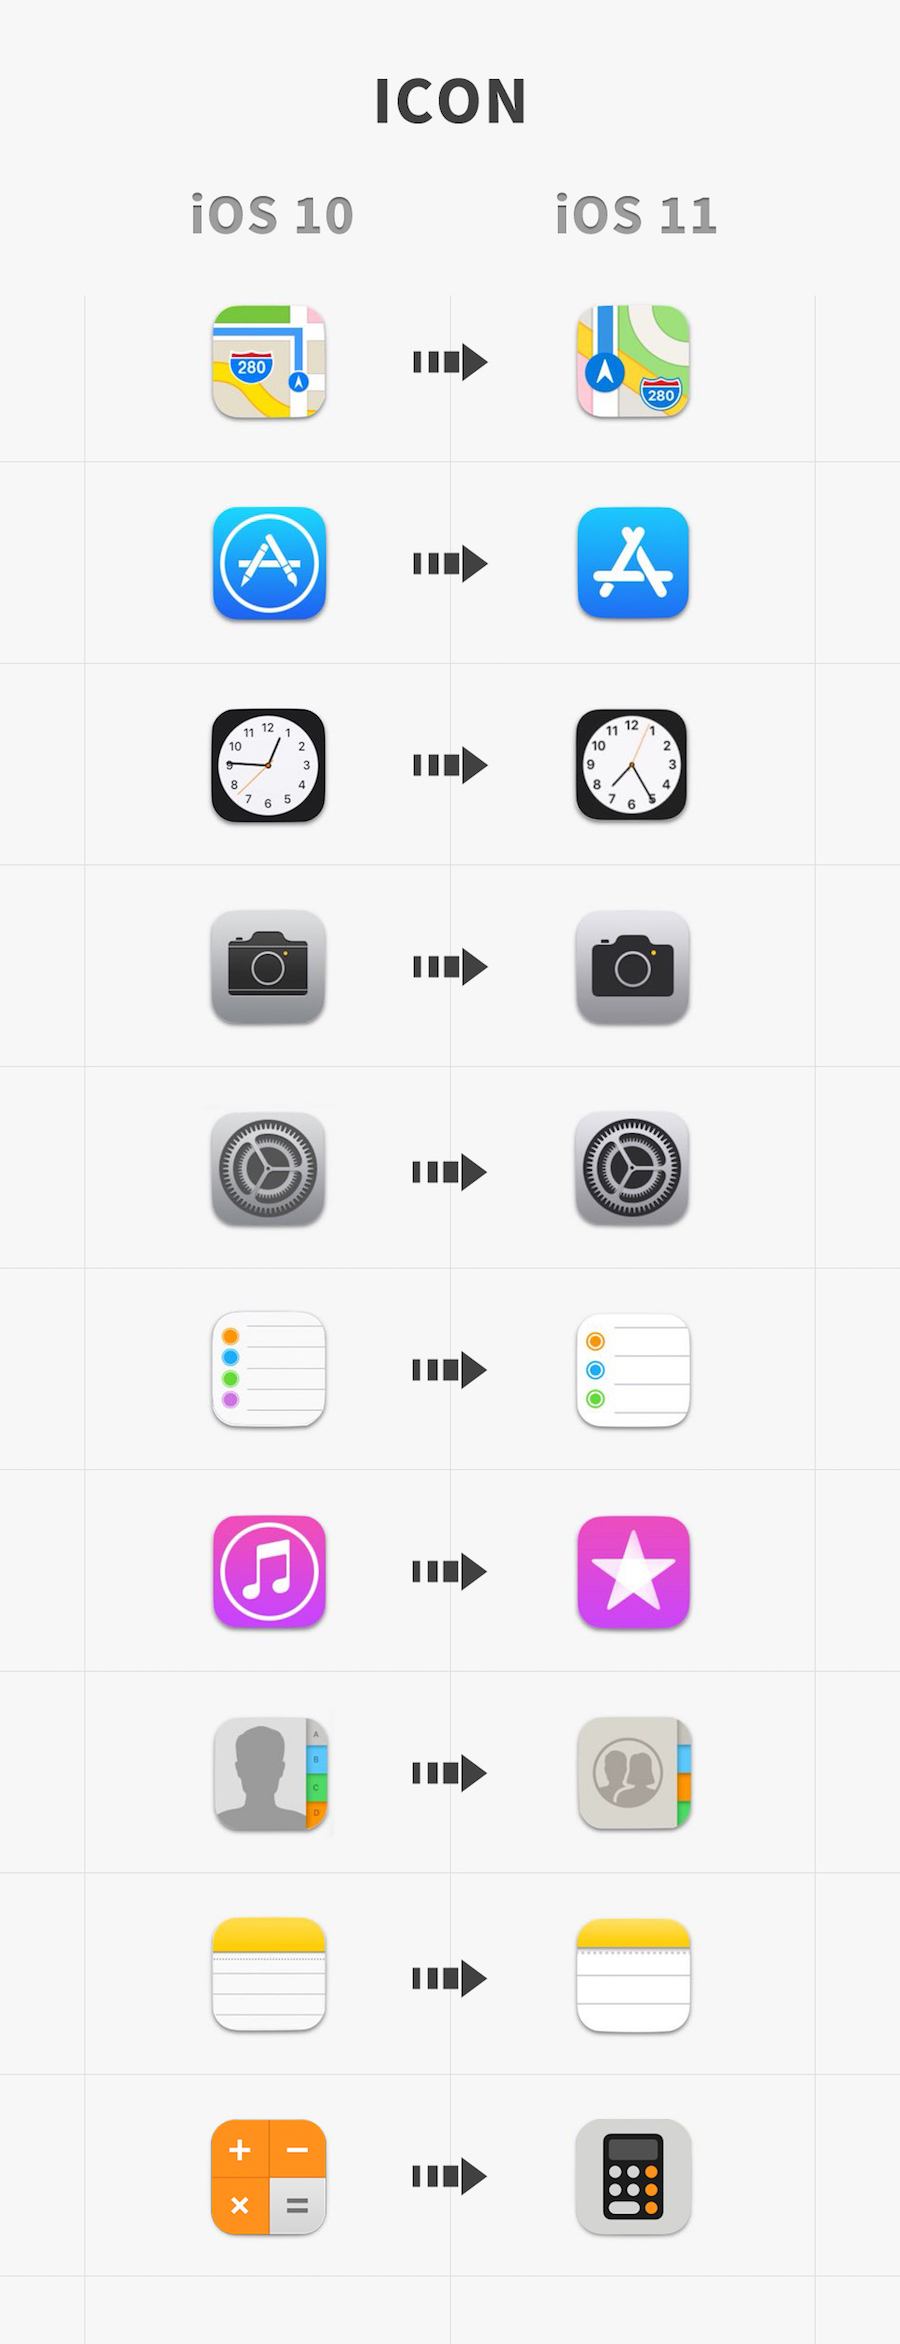 iOS 10 vs iOS 11: Icon